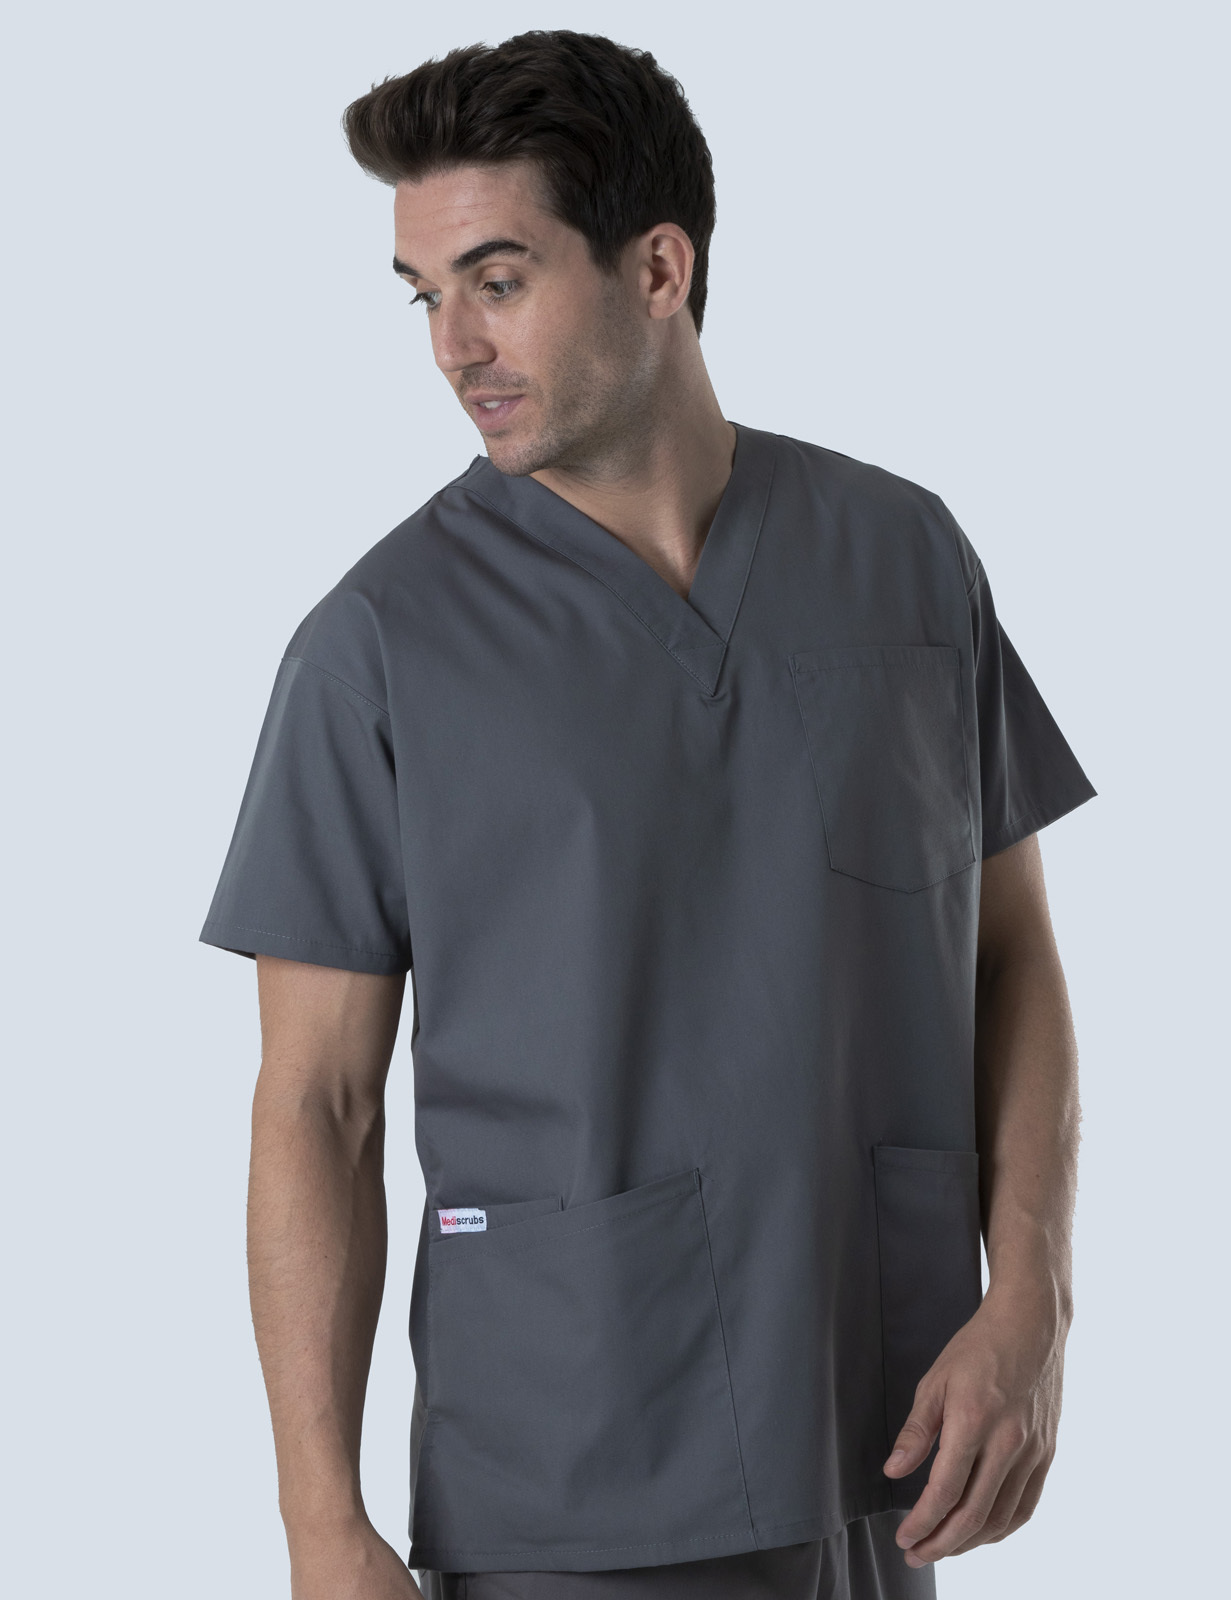 Queensland Children's Hospital Emergency Department Clinical Facilitator Uniform Top Bundle  (4 Pocket Top in Steel Grey incl Logos)